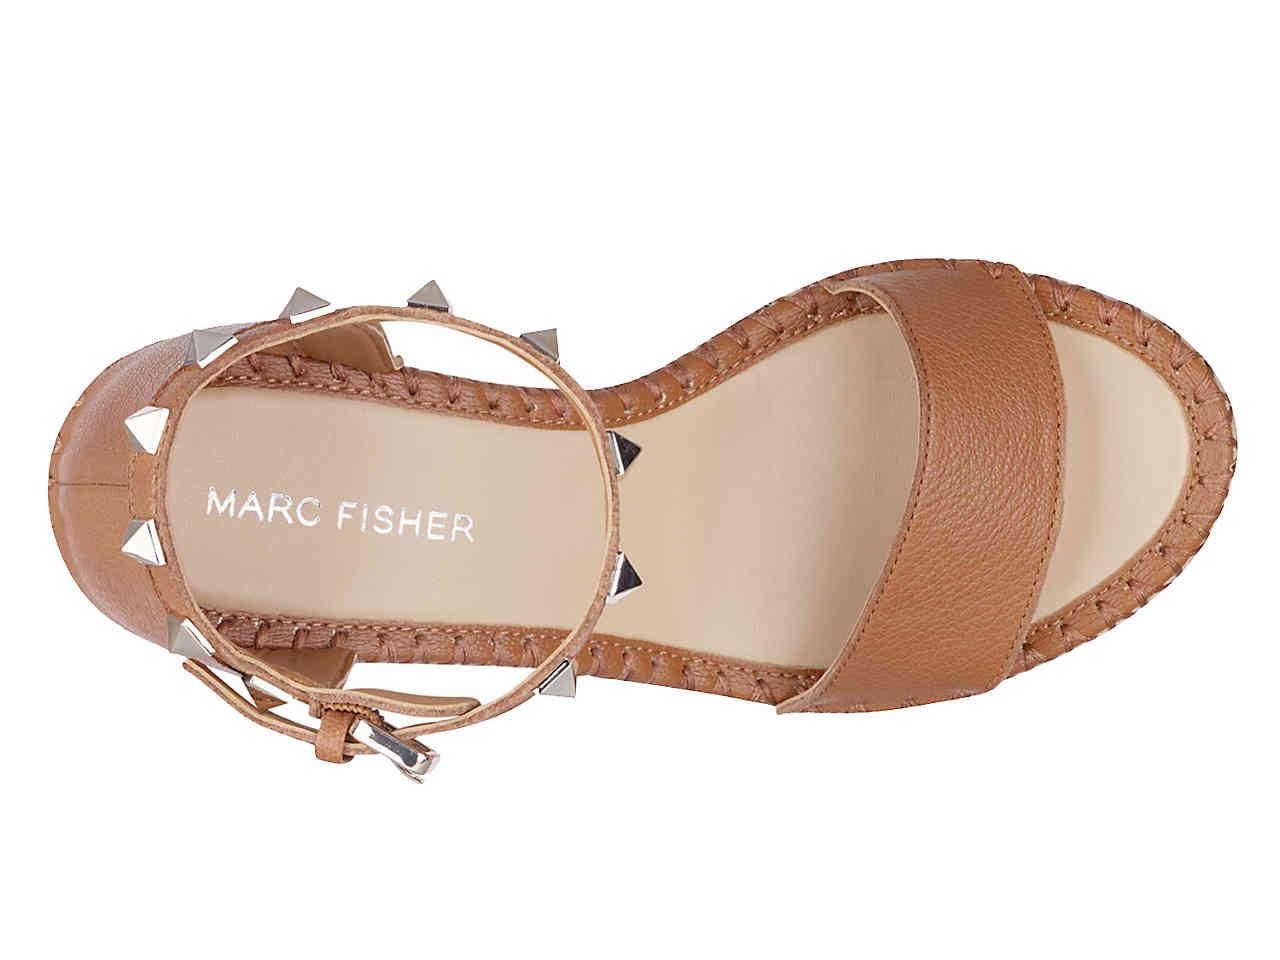 Marc Fisher Leather Kicker Wedge Sandal in Cognac (Brown